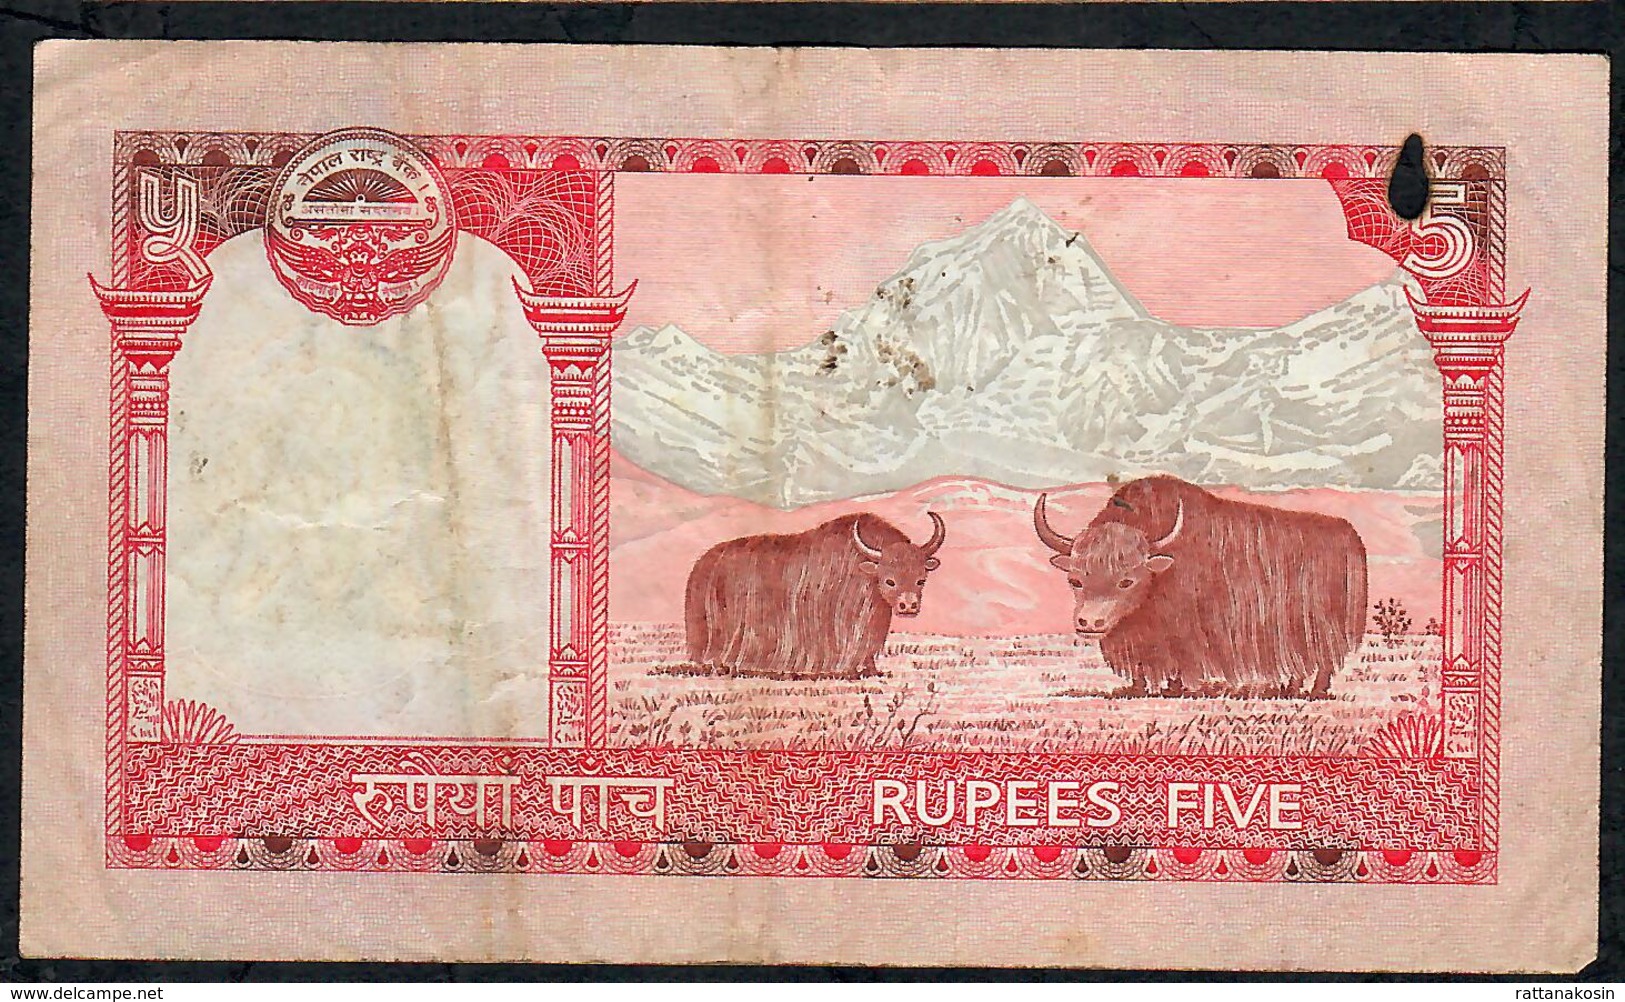 NEPAL P60b 5 RUPEES 2010 Signature 16    VF    NO P.h. - Népal